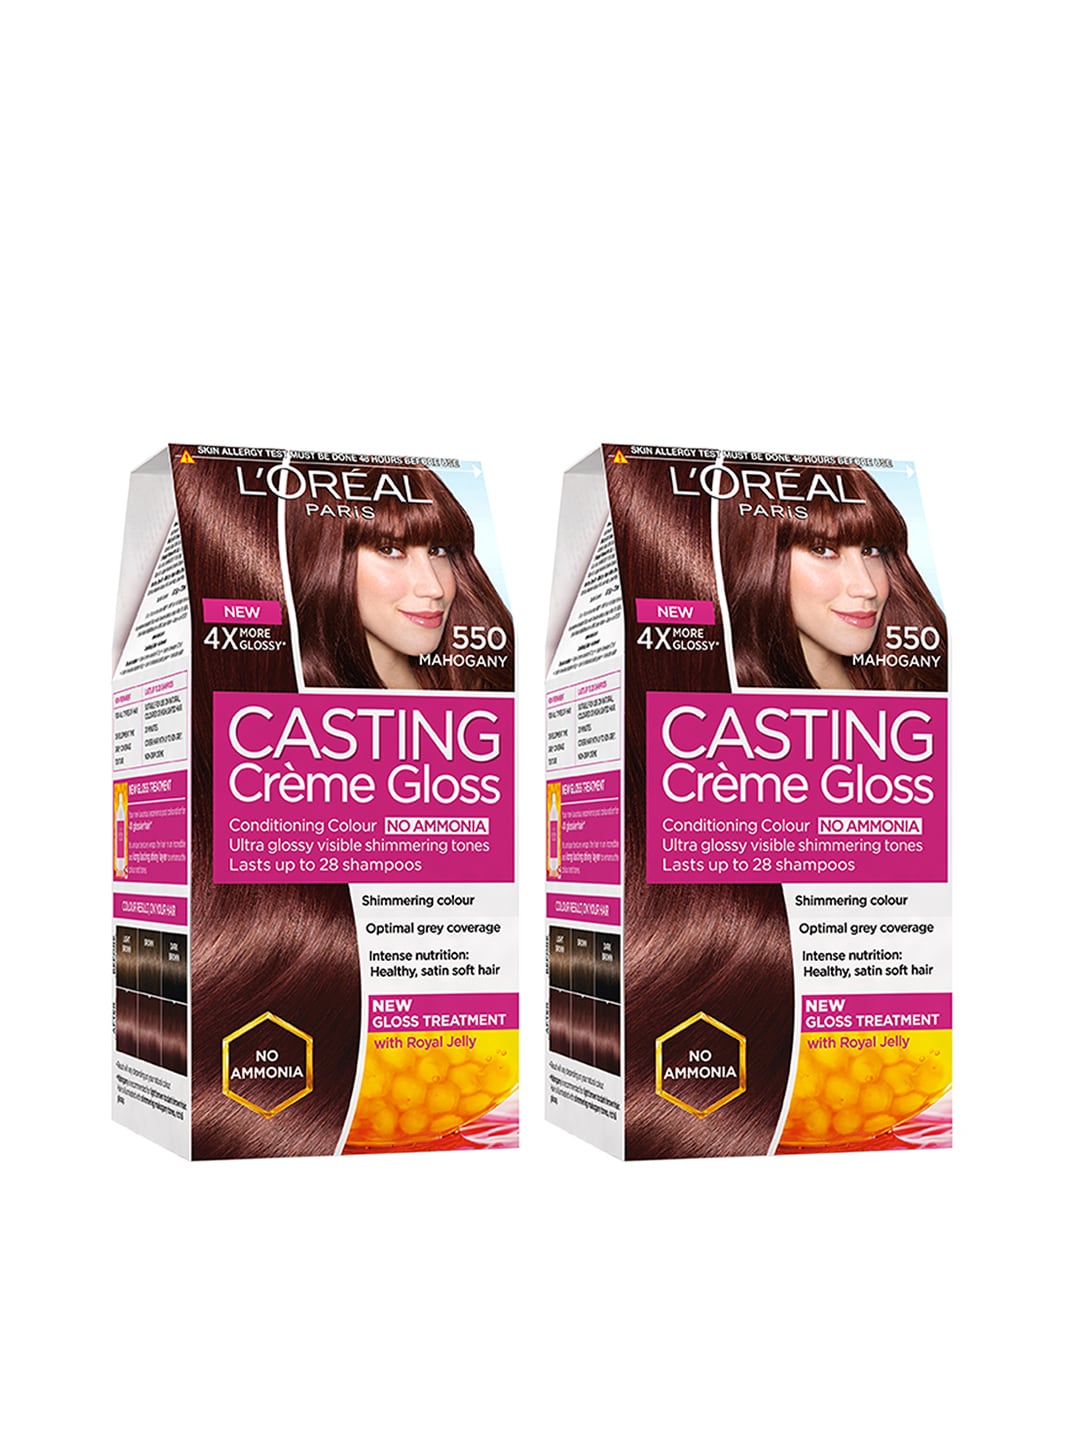 LOreal Paris Set of 2 Casting Creme Gloss Hair Color - Mahogany 550 Price in India